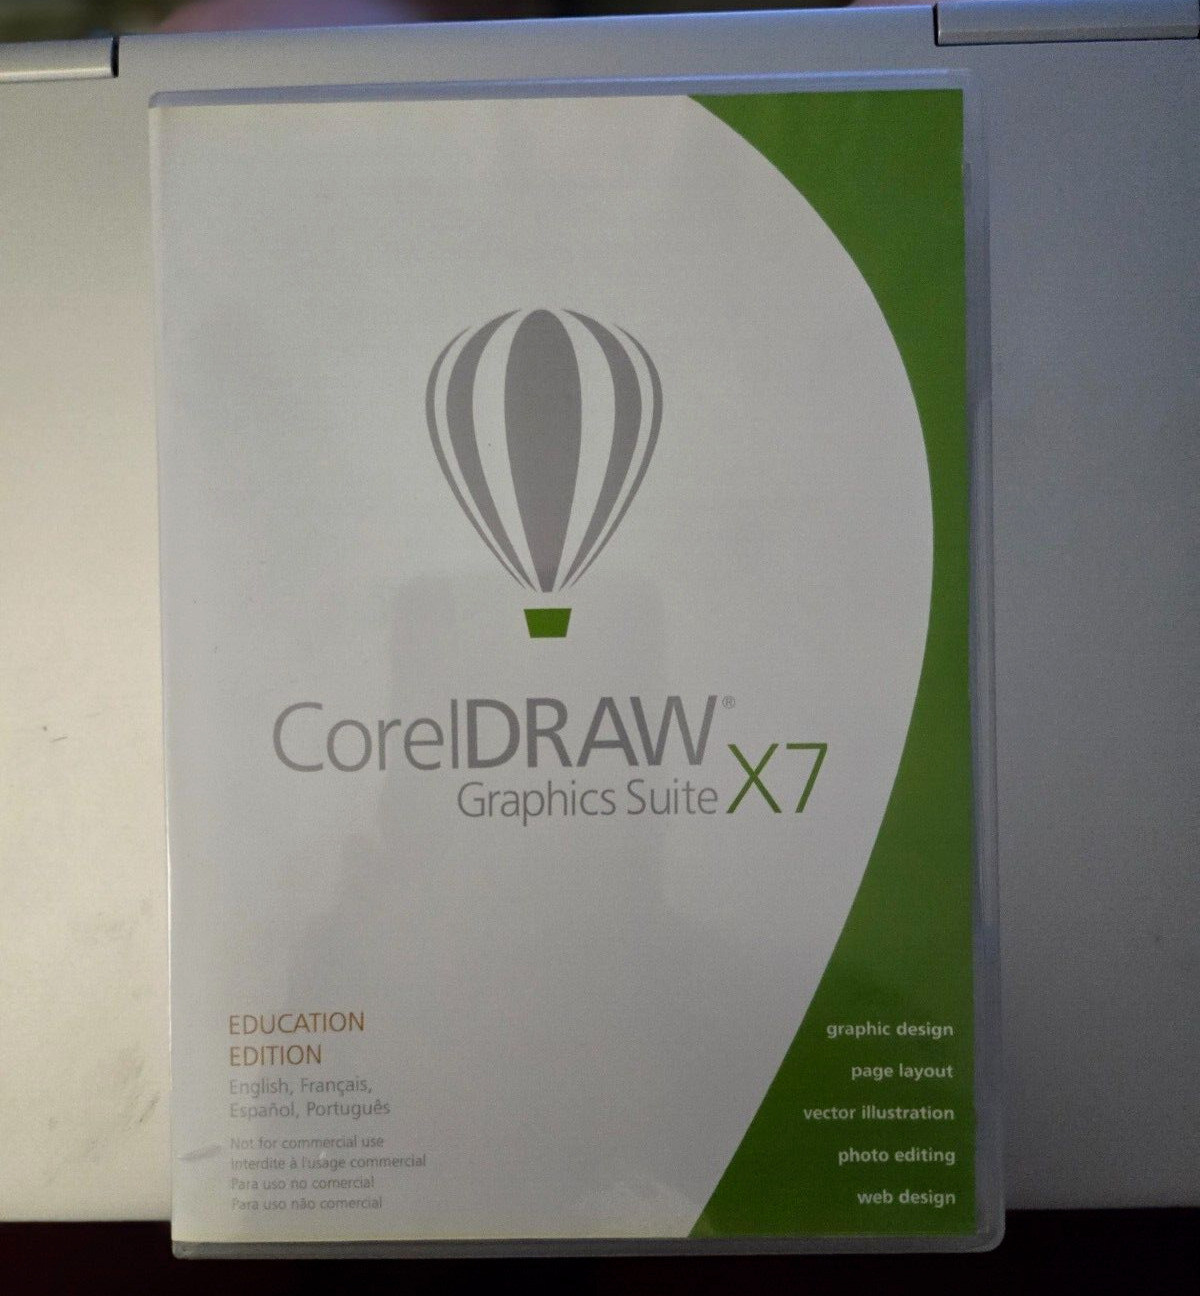 Corel Draw Graphic Suite X7 (Education Edition)